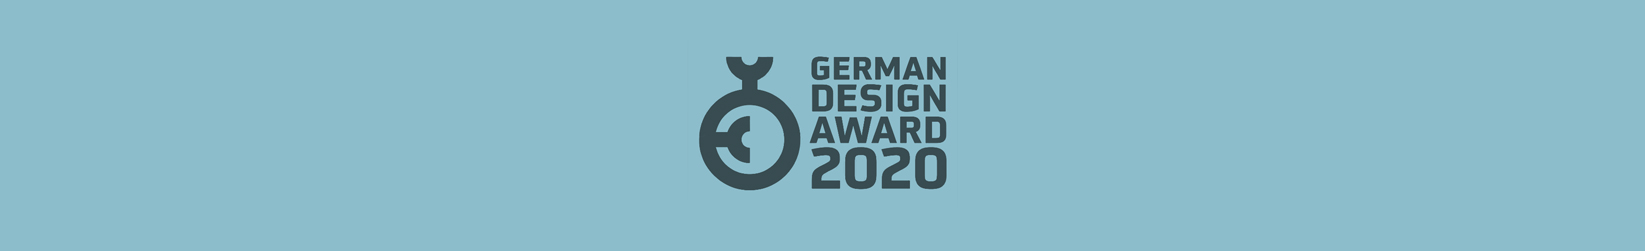 German Design Award 2020 Studio Pastina novità